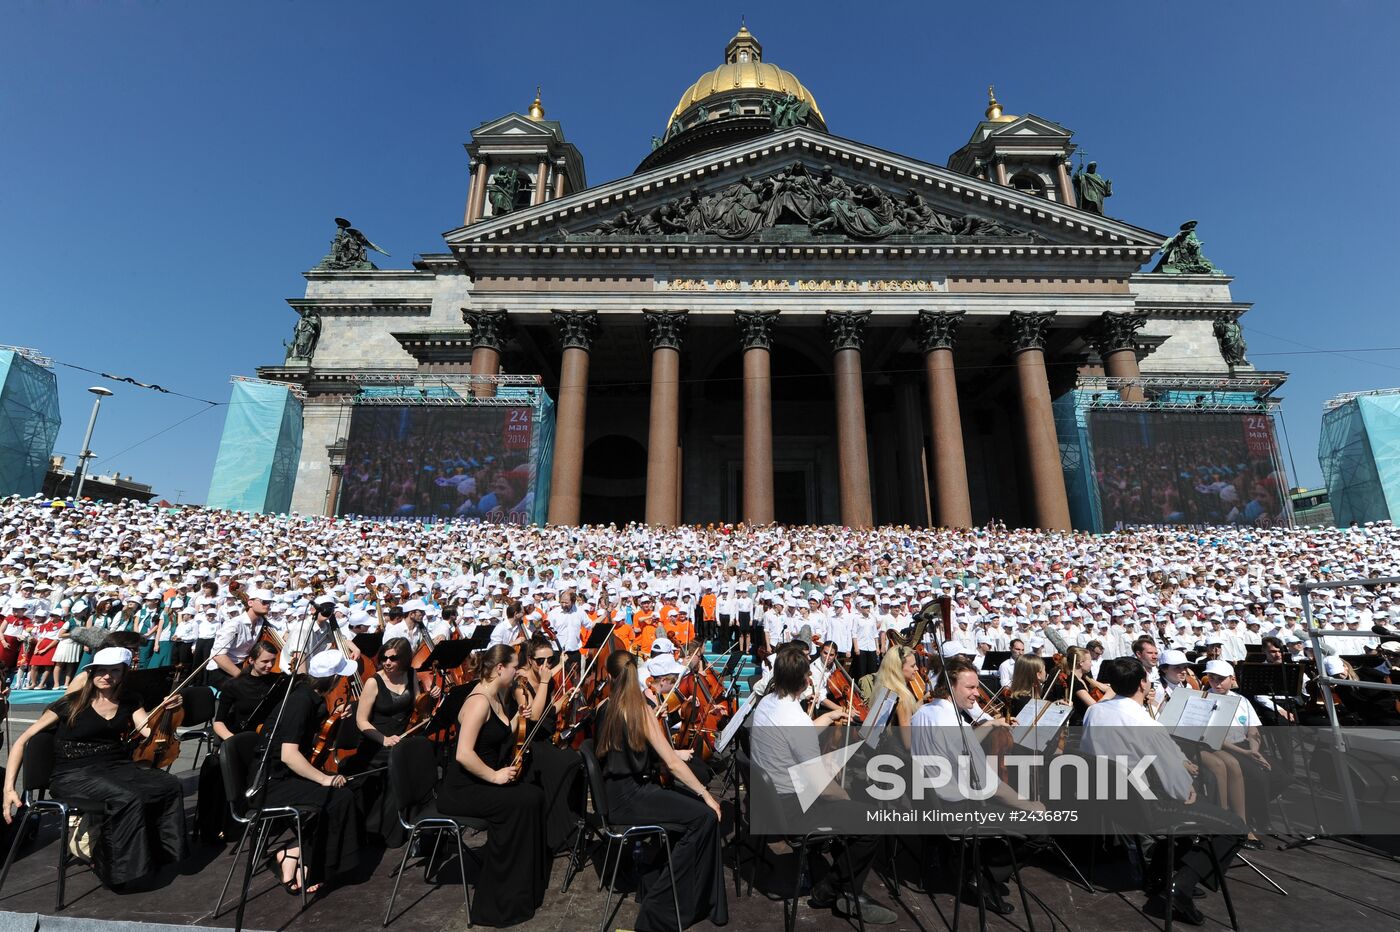 Vladimir Putin attends concert at St. Isaac's in St. Petersburg